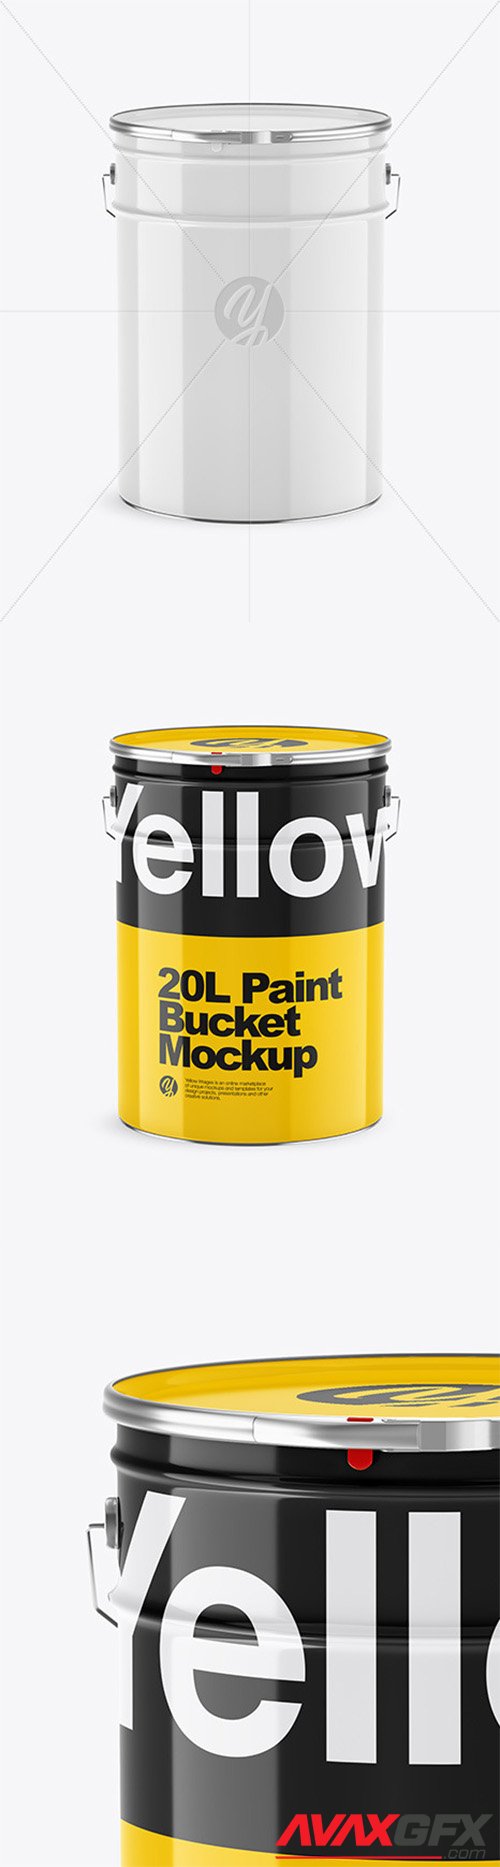 20L Glossy Paint Bucket Mockup 65166